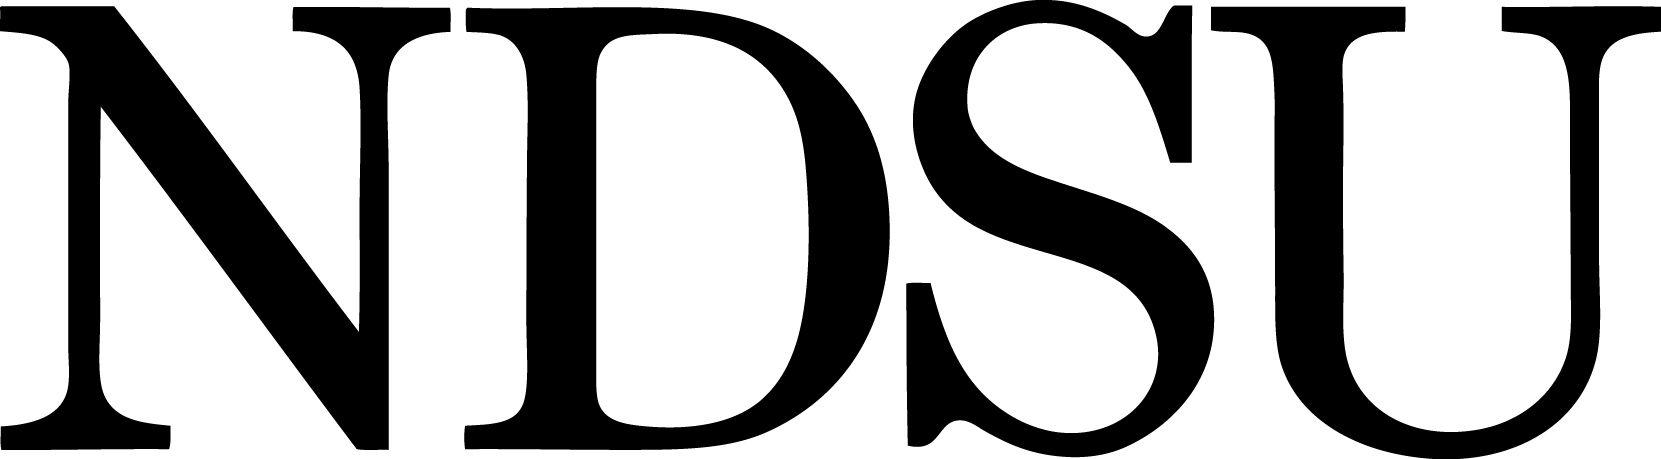 NDSU Bison Logo - NDSU Logos | University Relations | NDSU